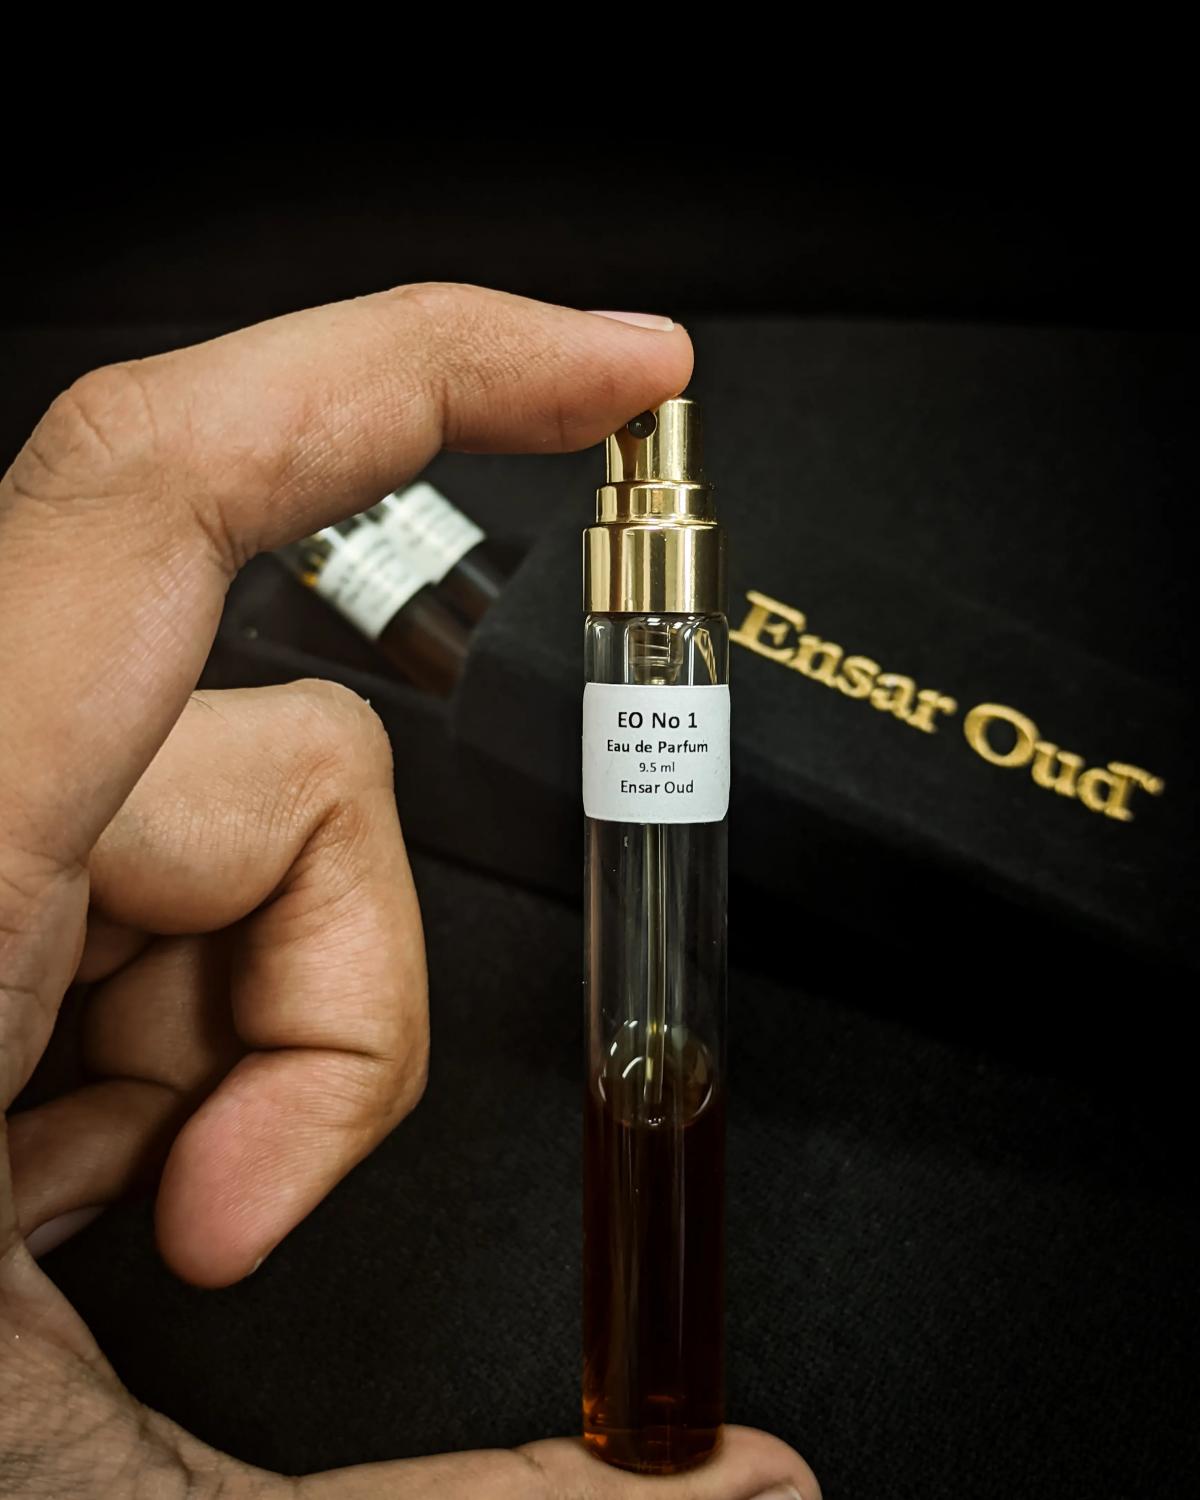 EO No 1 Ensar Oud perfume - a fragrance for women and men 2018